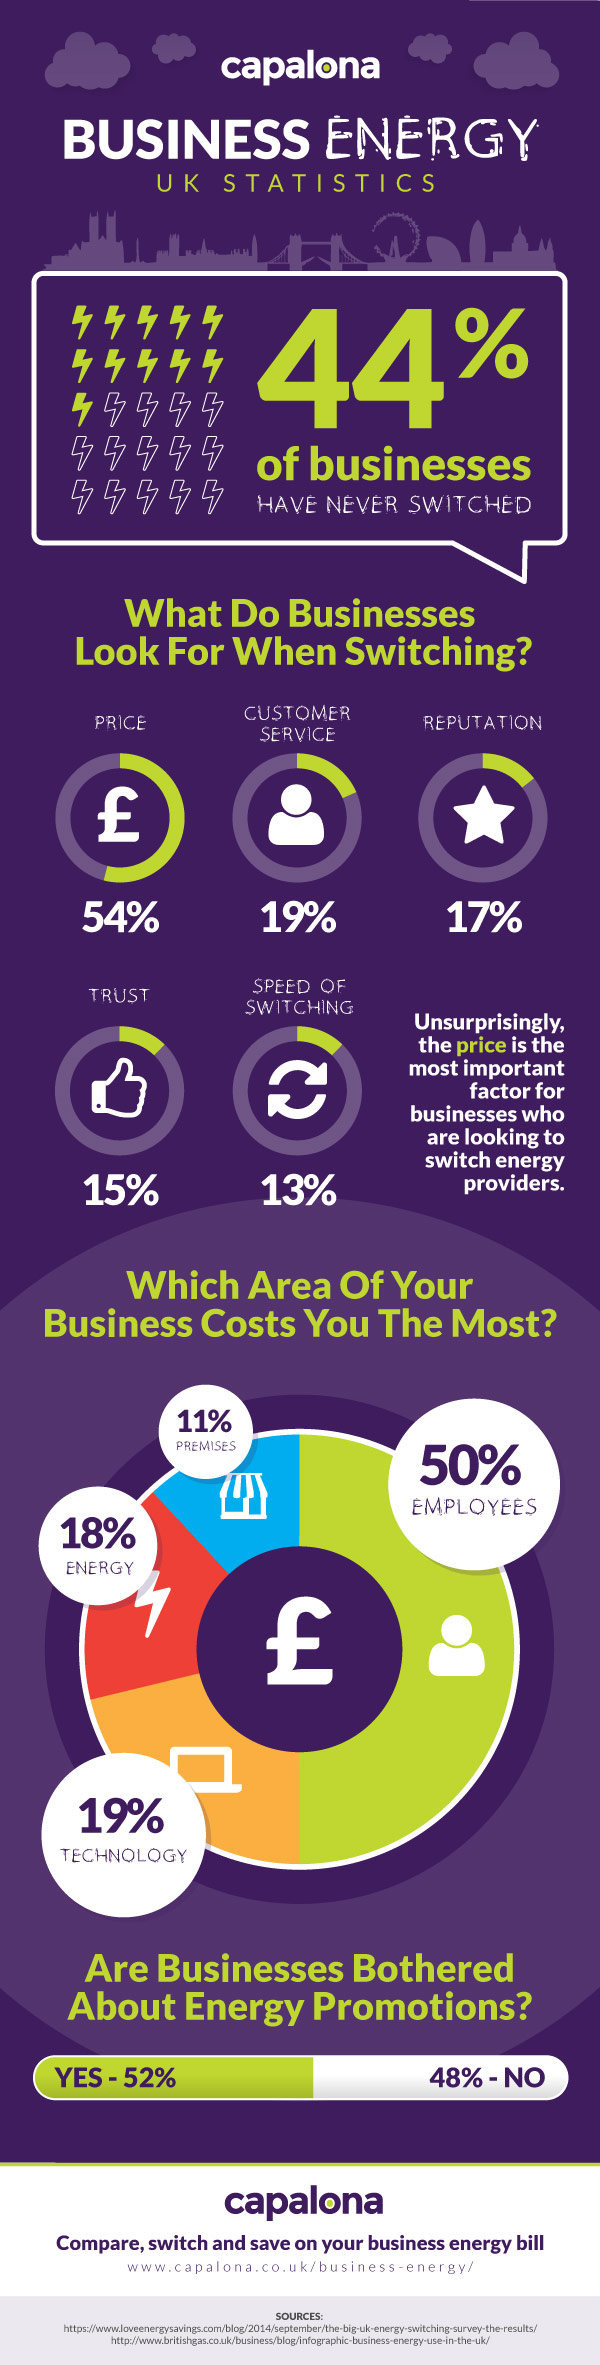 Business Energy UK Statistics infographic